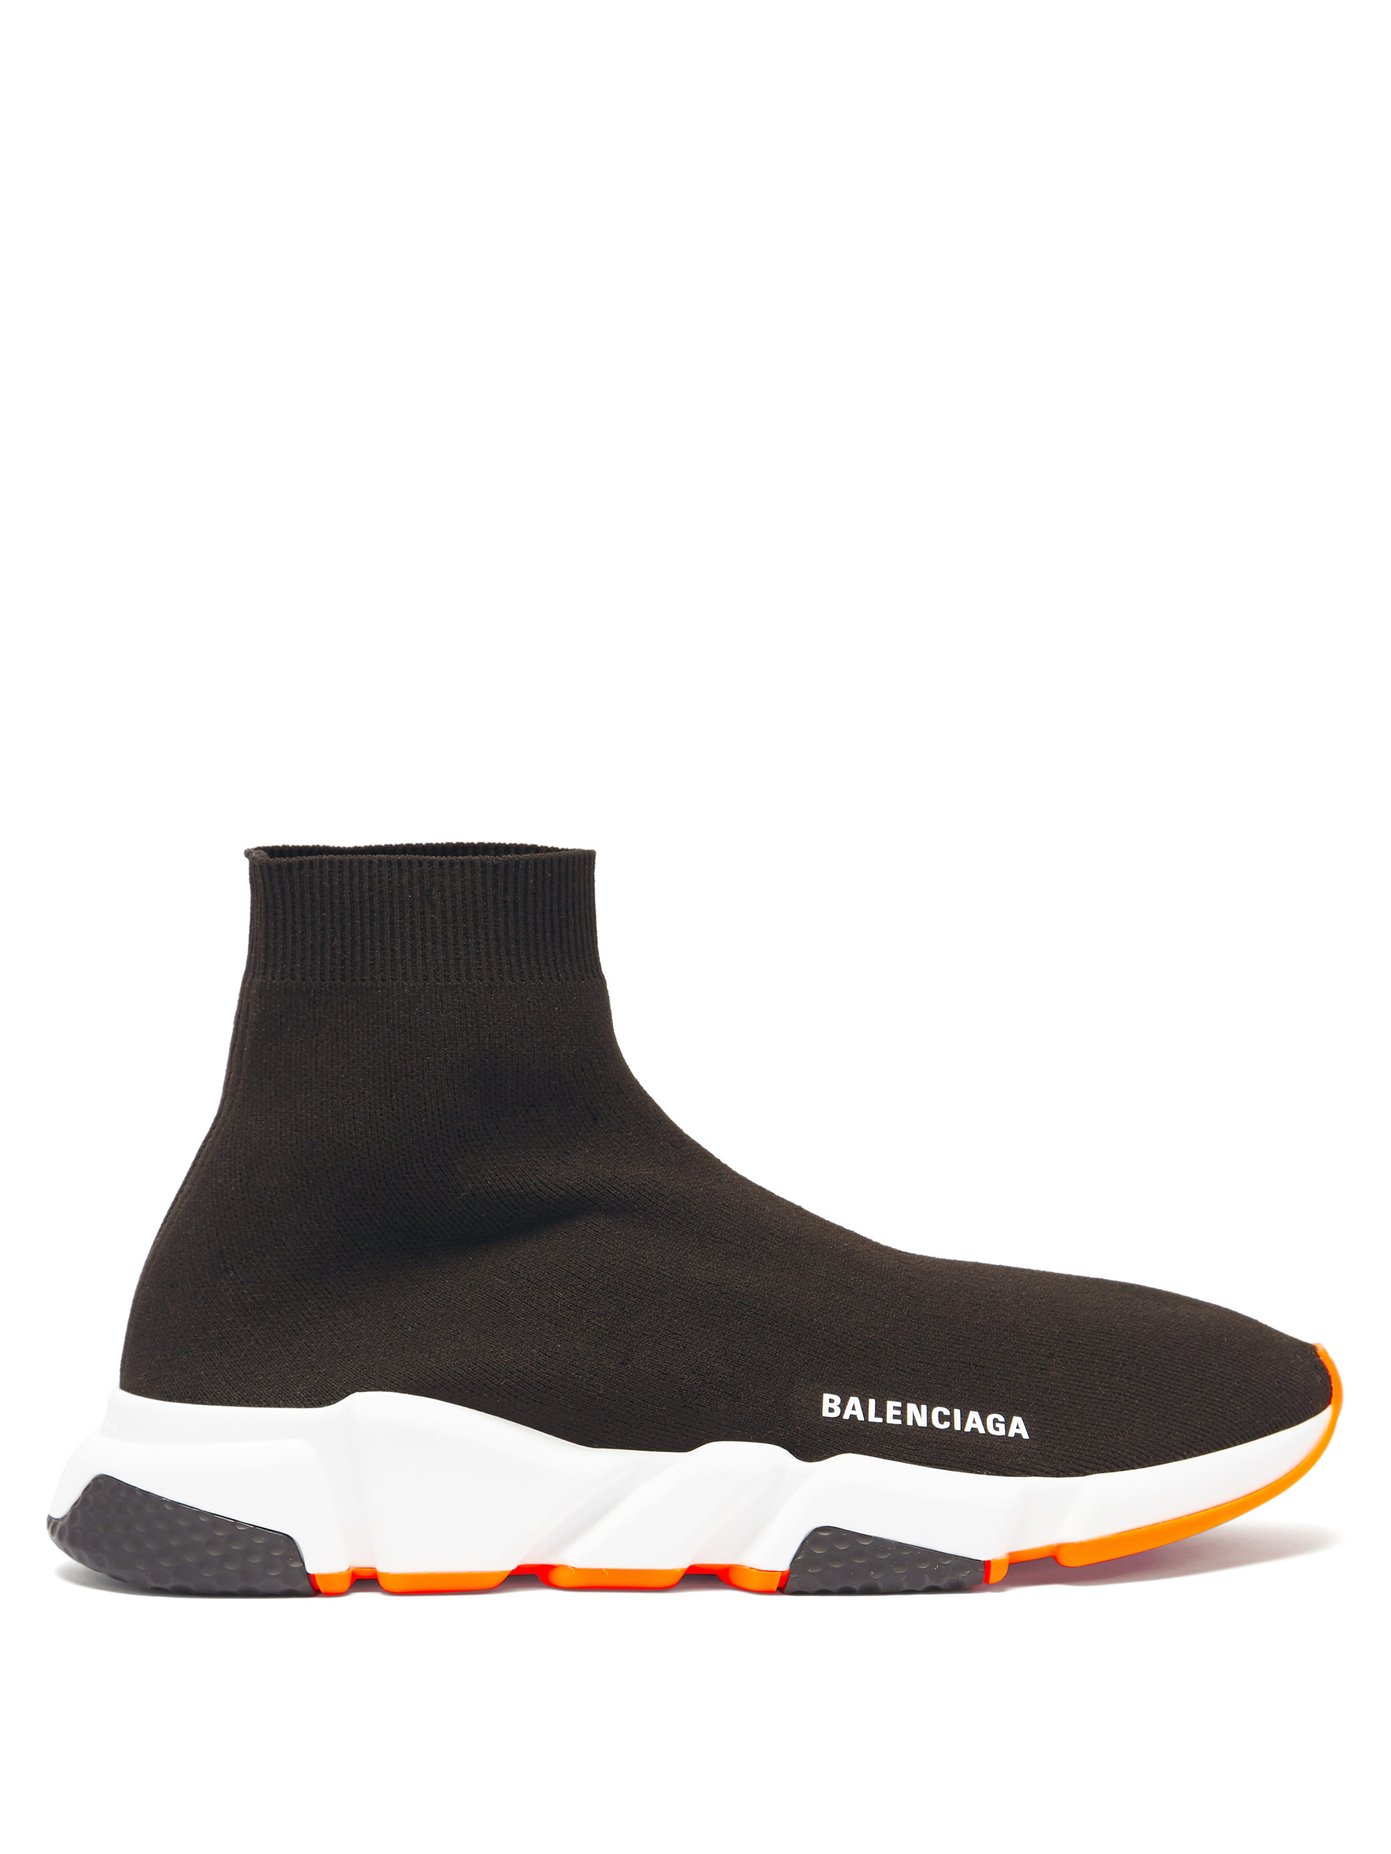 balenciaga sock shoes orange